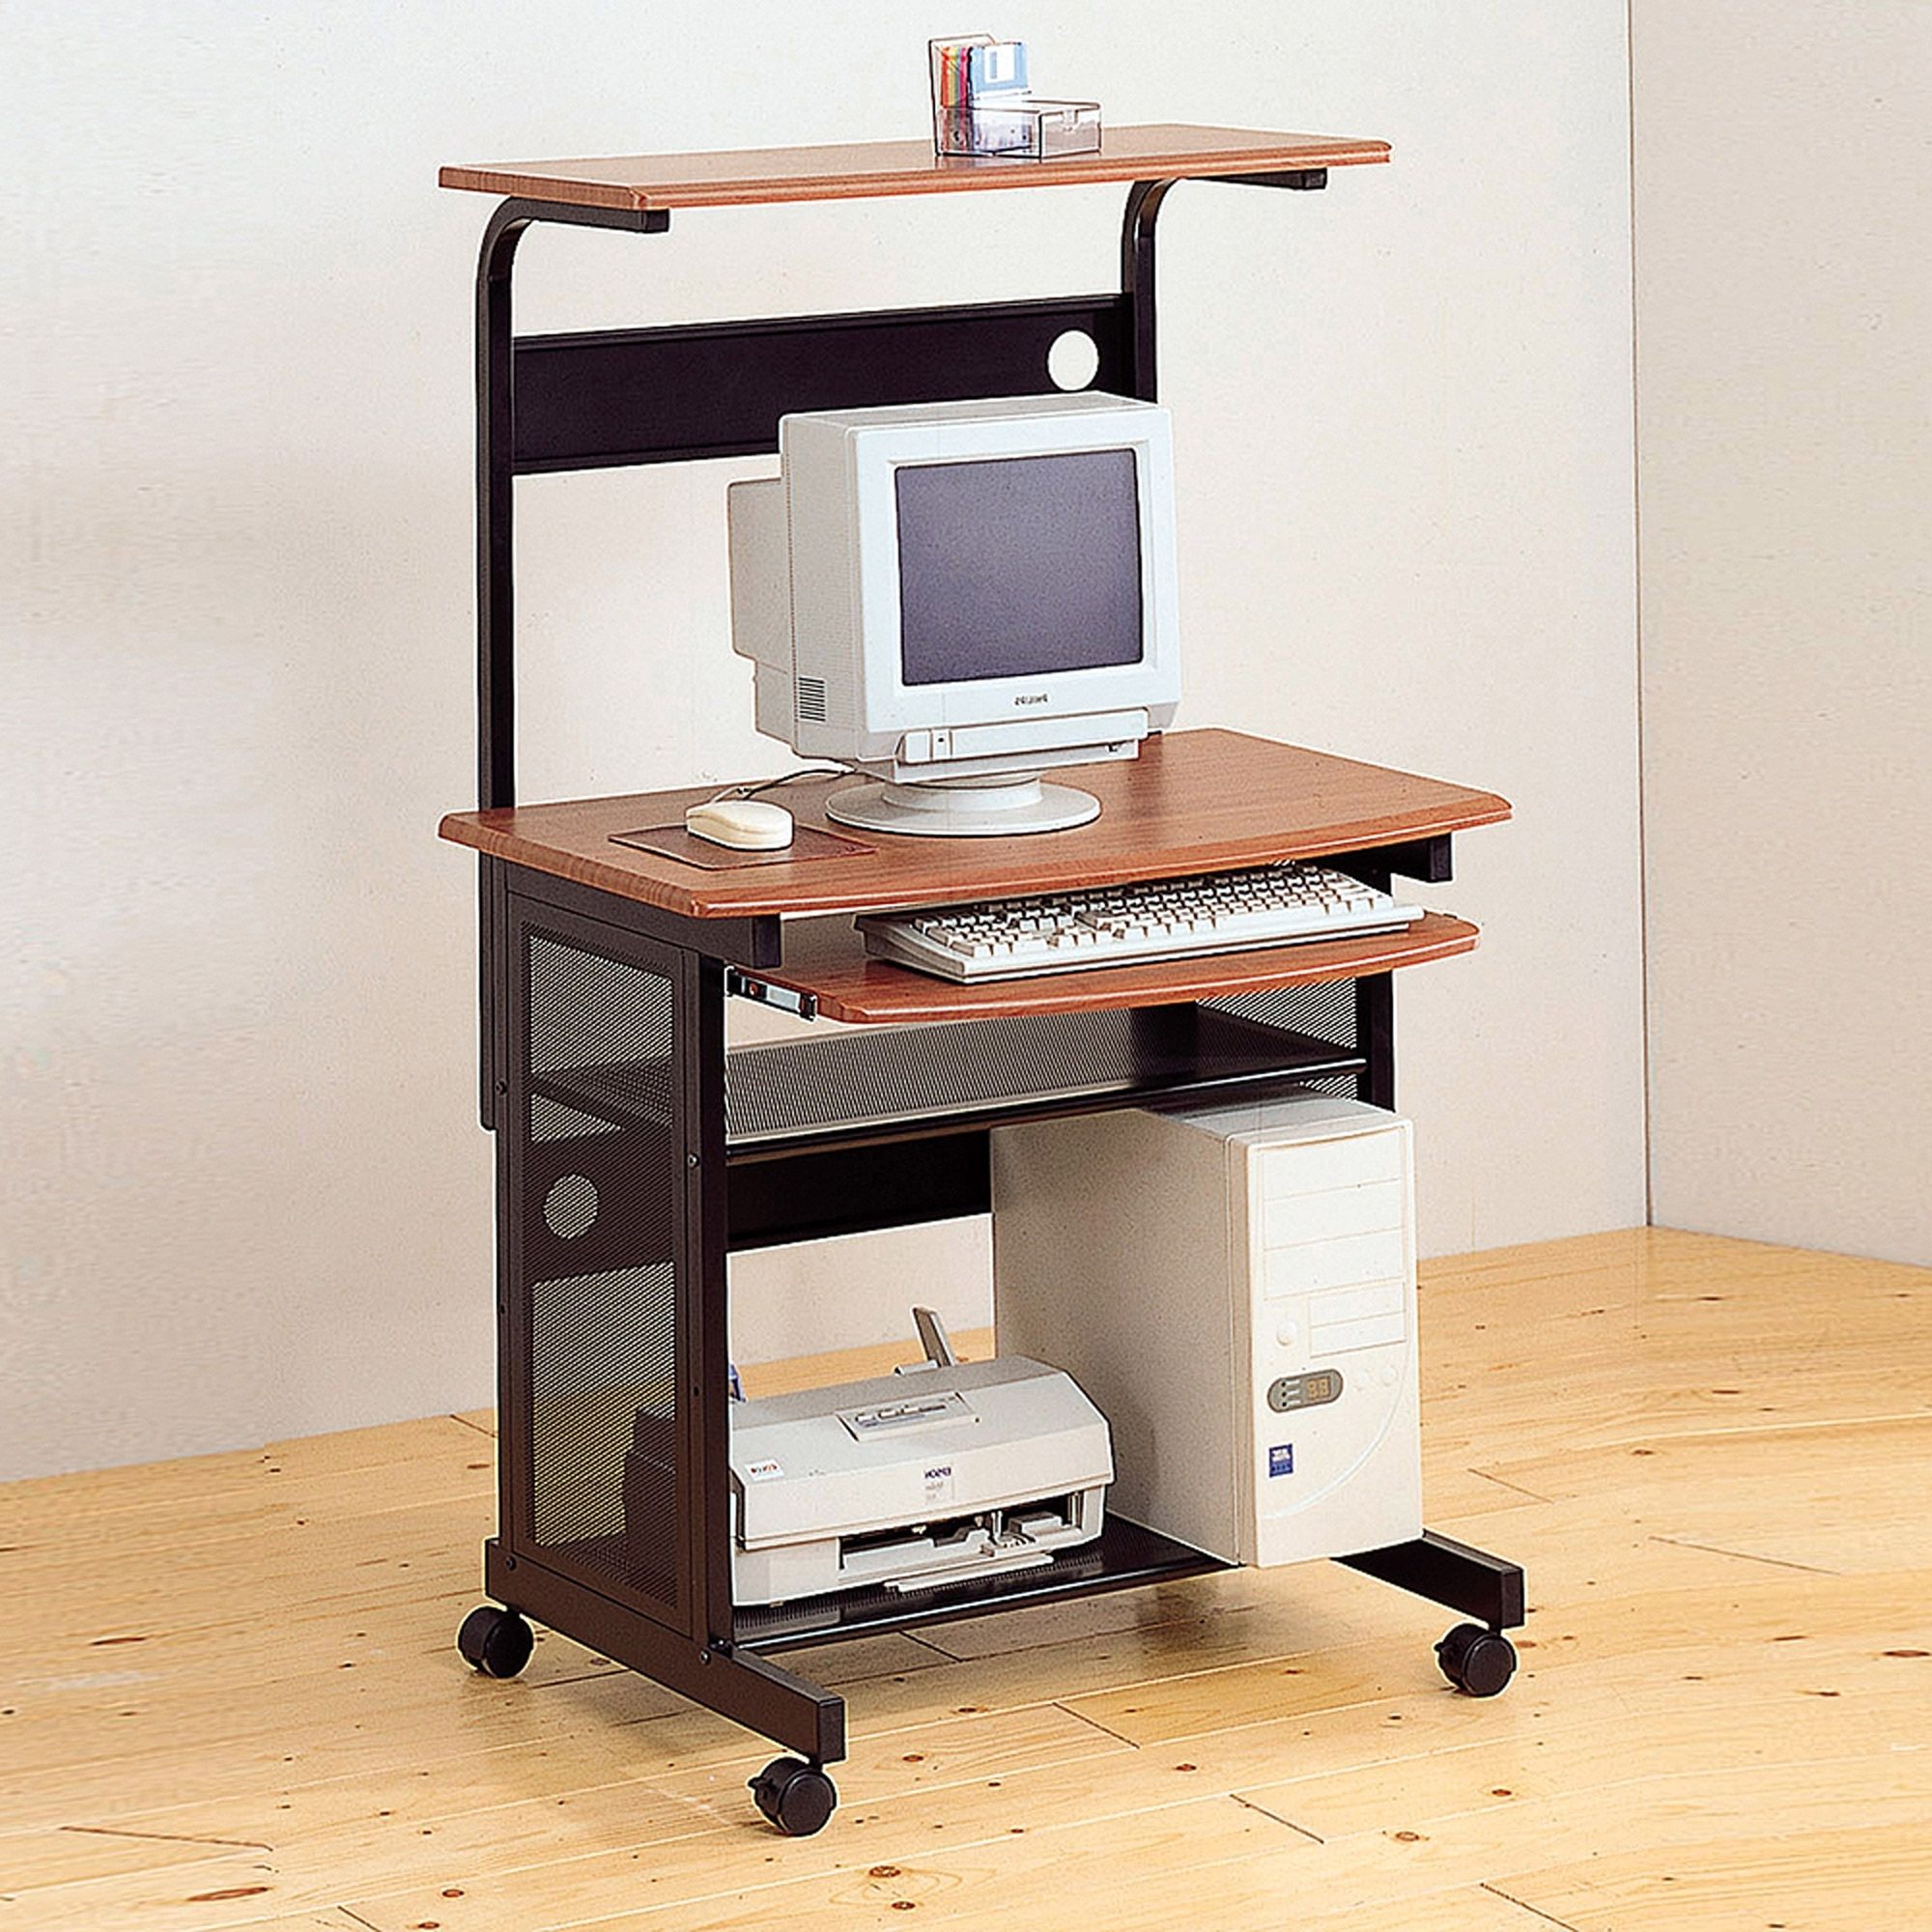 Computer Desks At Walmart Within Most Popular Coaster Mobile Station Computer Desk – Walmart (View 2 of 20)